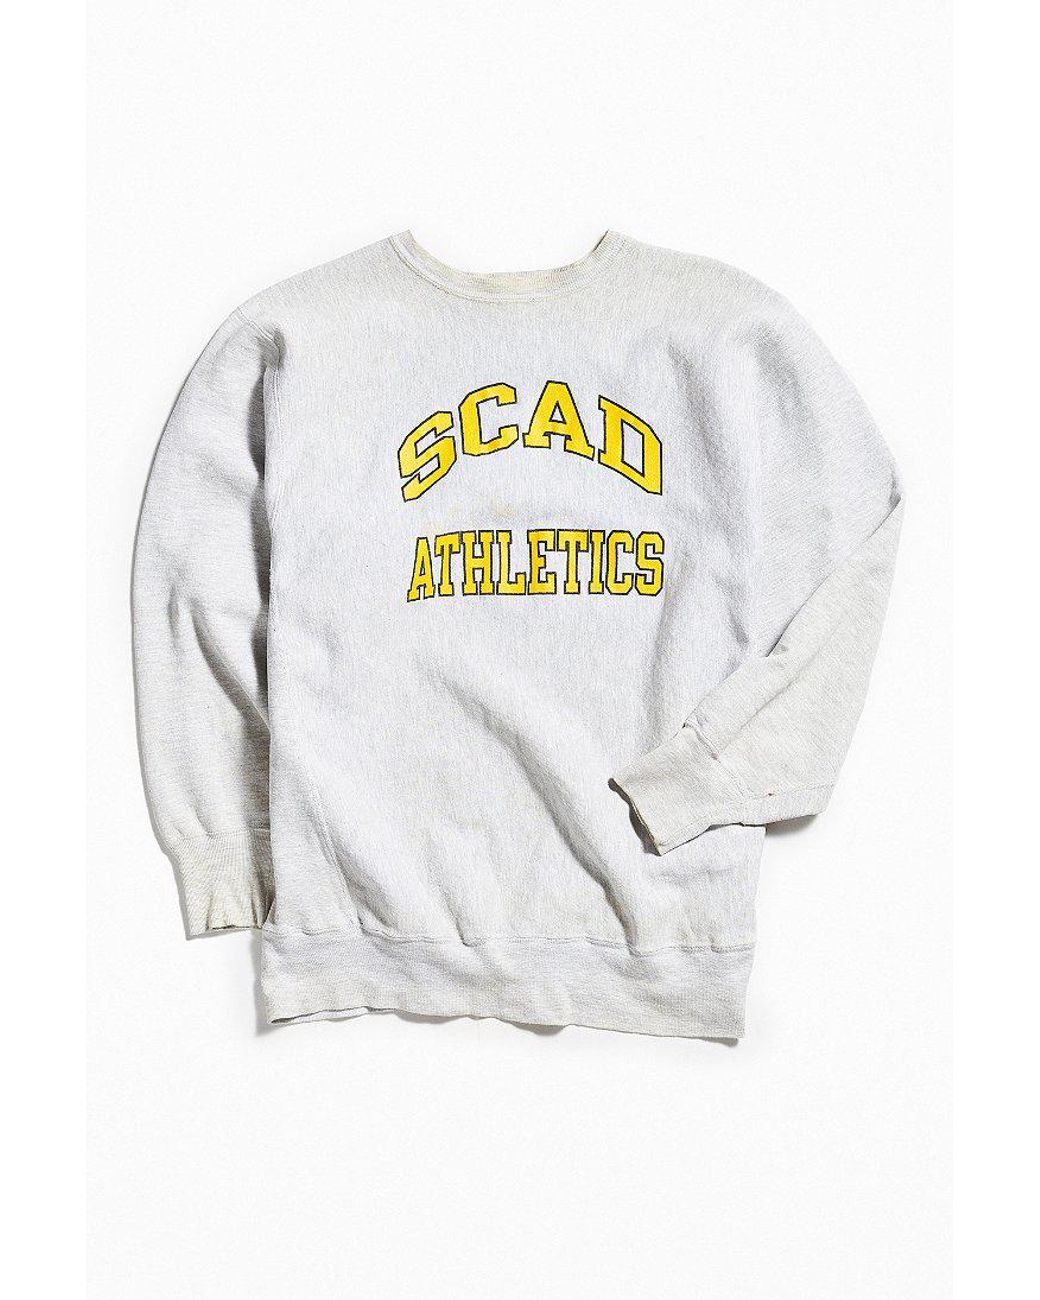 Urban Outfitters Vintage Champion Scad Athletics Crew Neck Sweatshirt ...